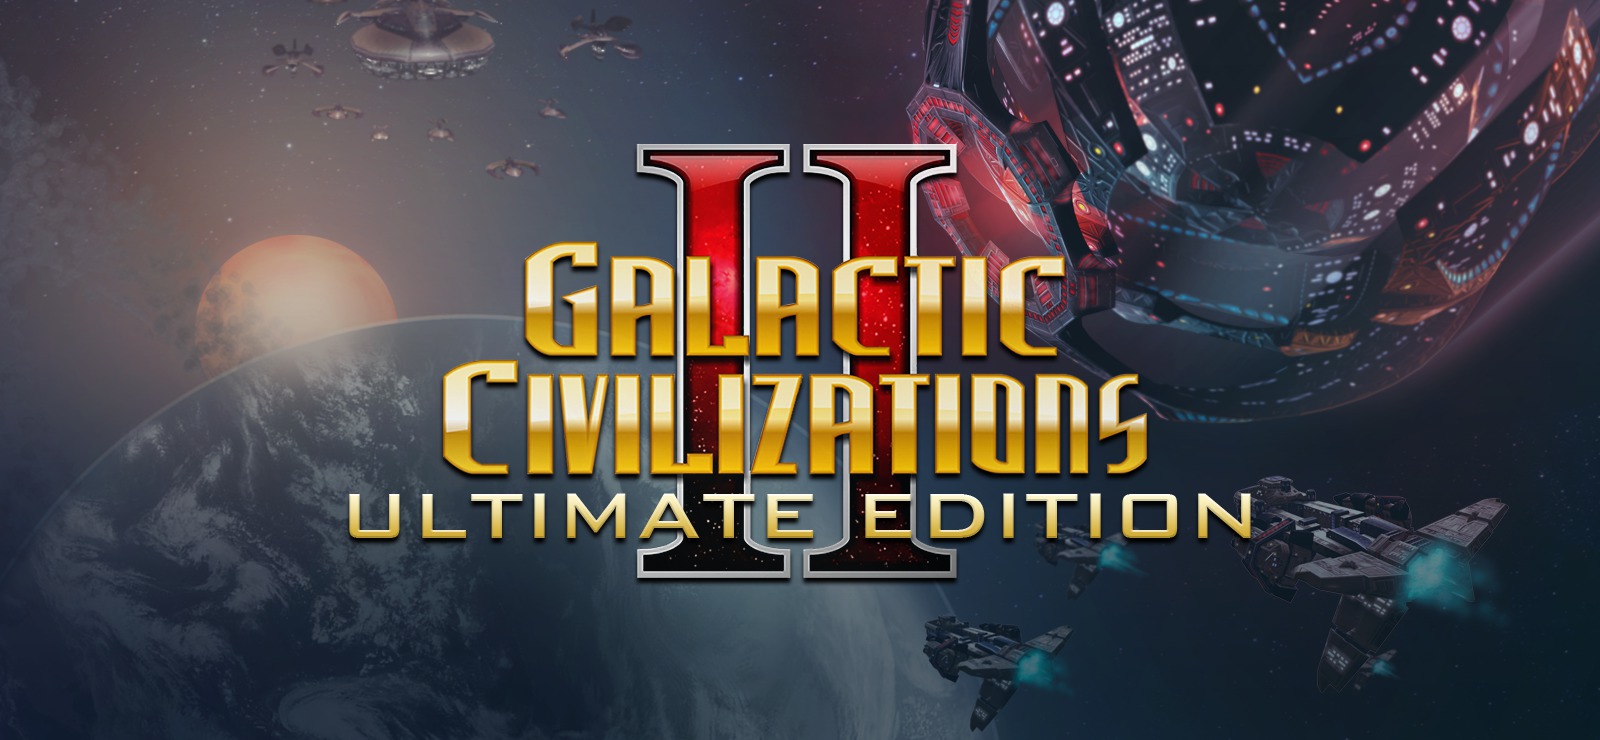 Nhanh tay sở hữu miễn phí tựa game cổ nhưng hay Galactic Civilizations II: Ultimate Edition